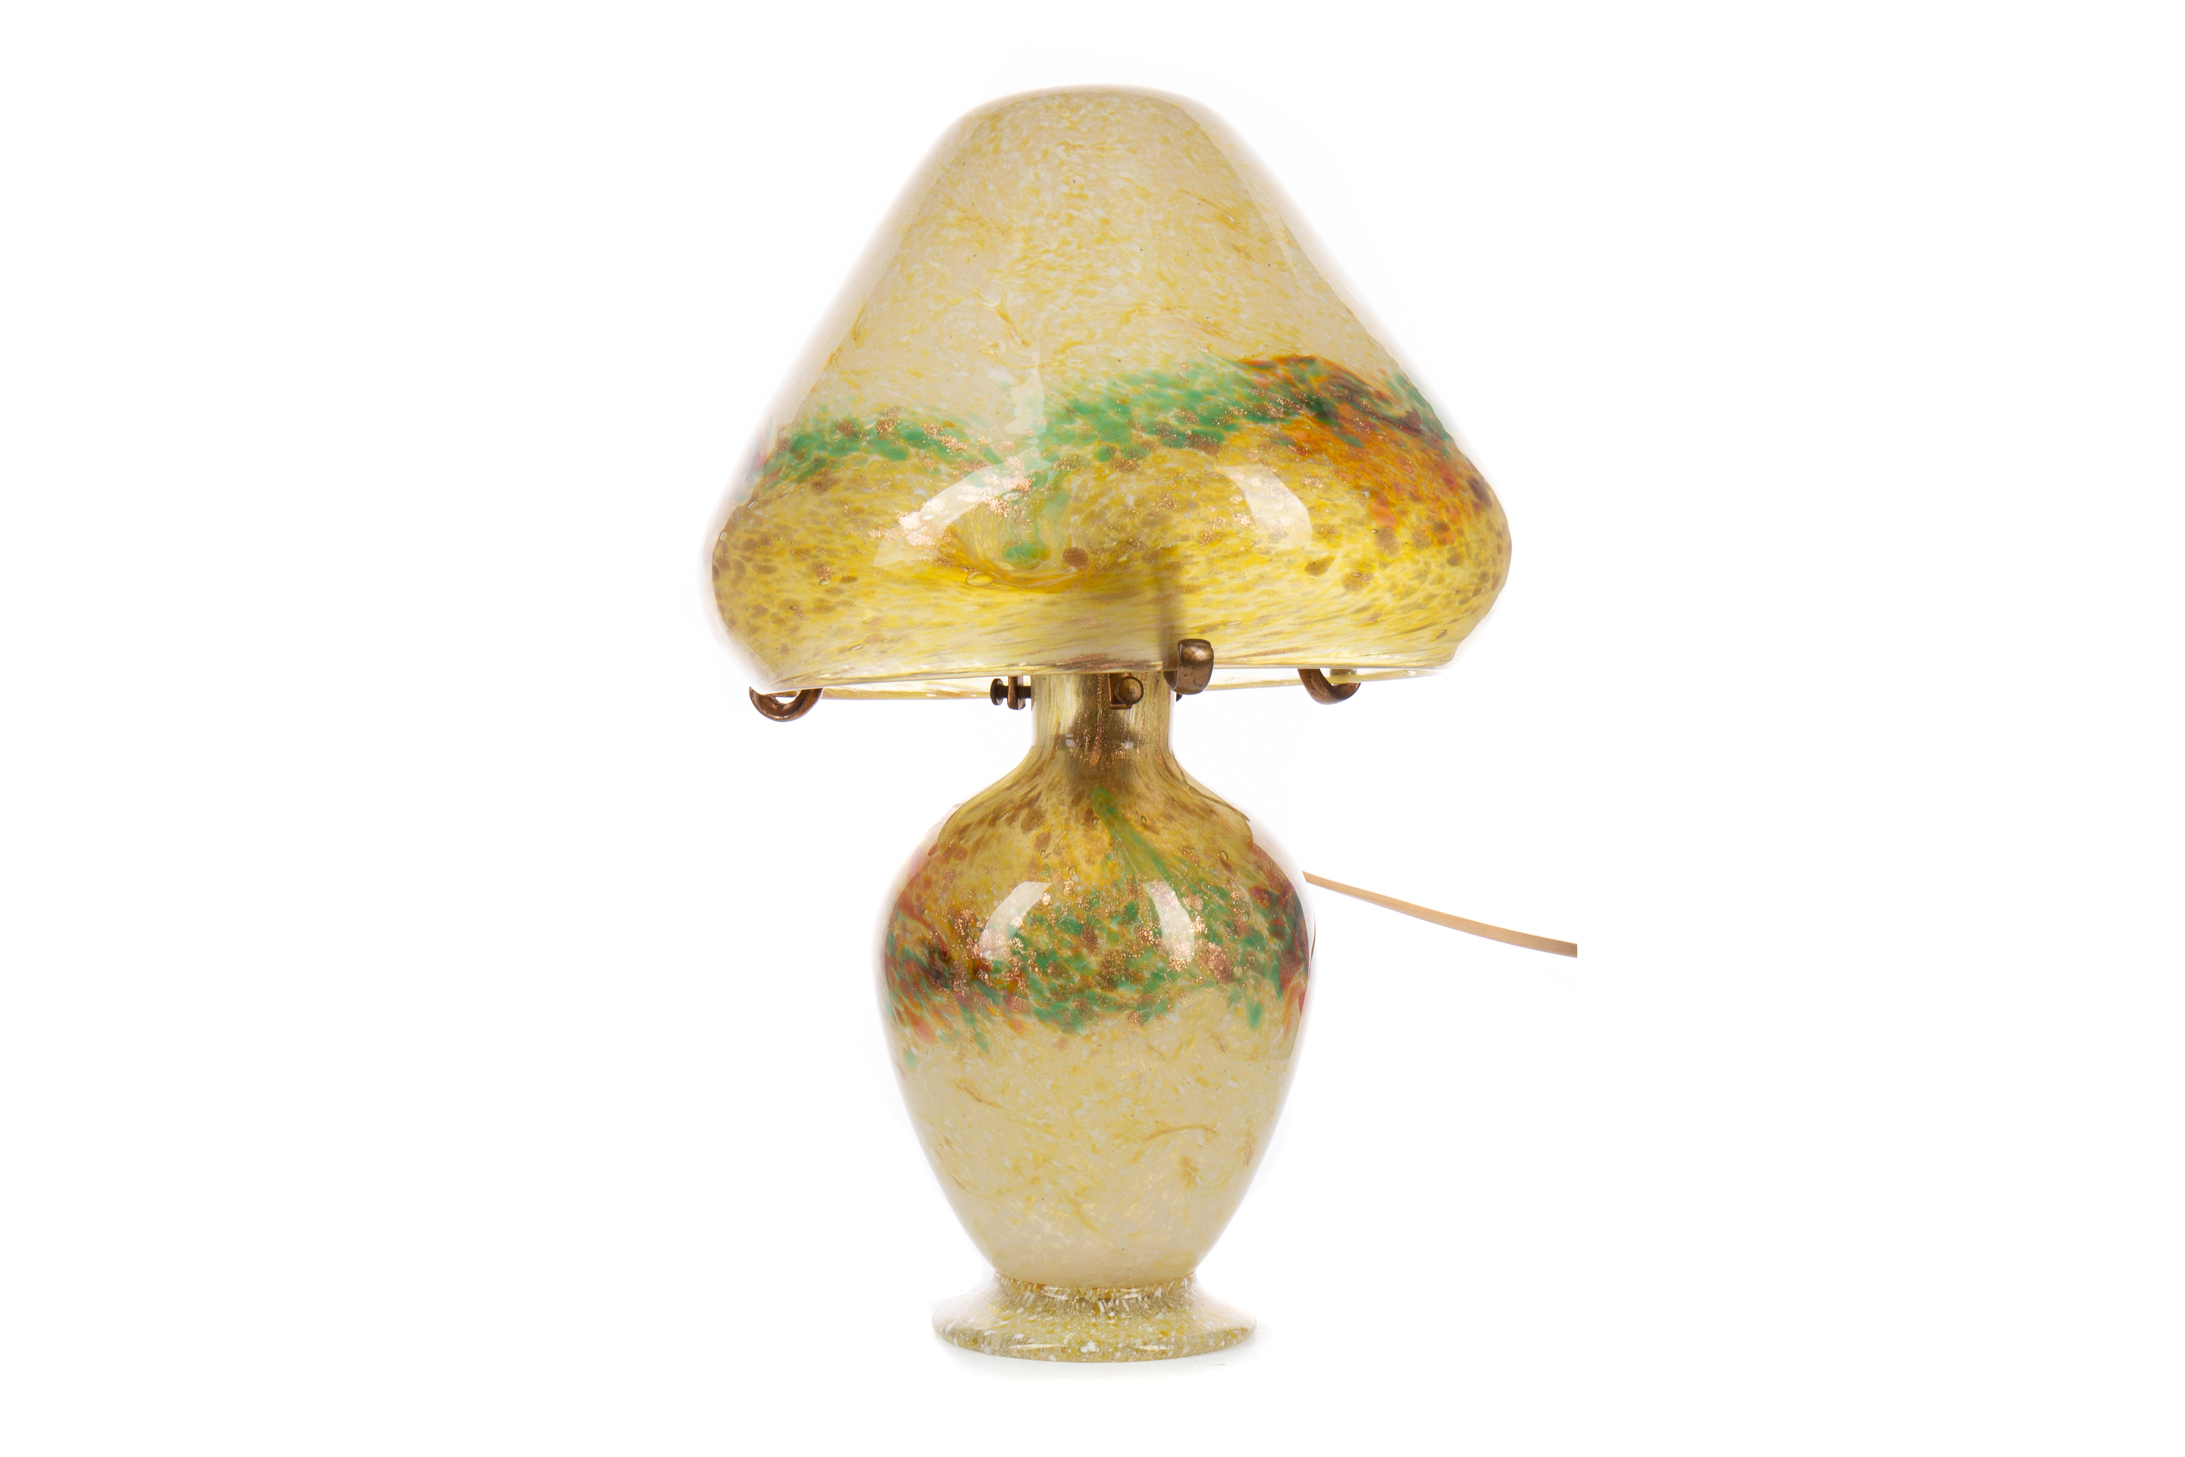 A MONART GLASS MUSHROOM LAMP